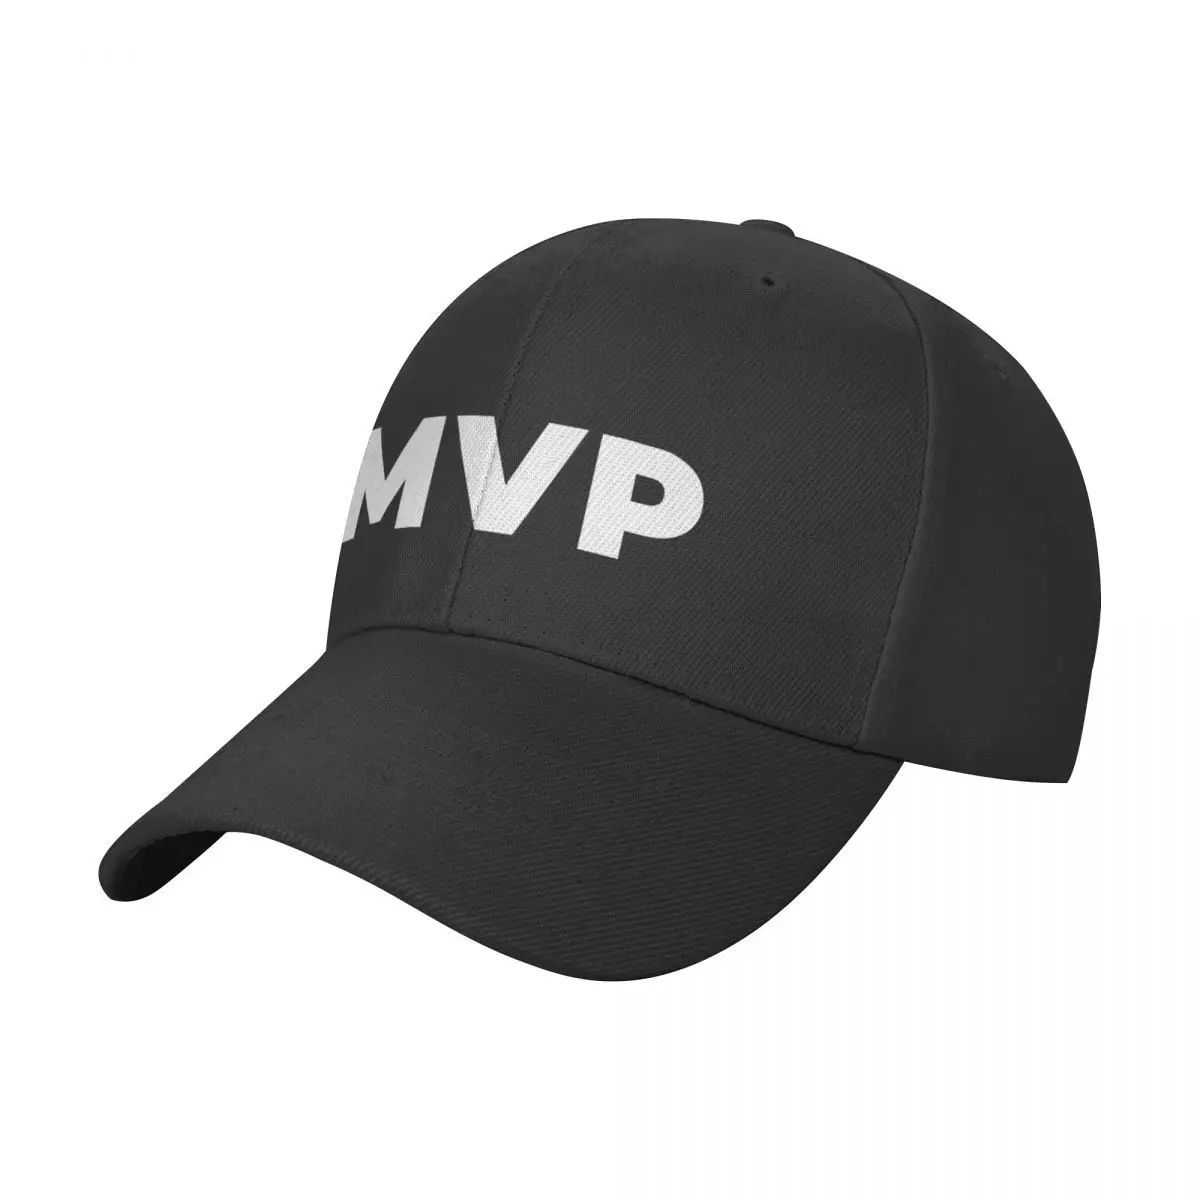 MVP Baseball Cap Big Size Hat New Hat Hat Female Men's